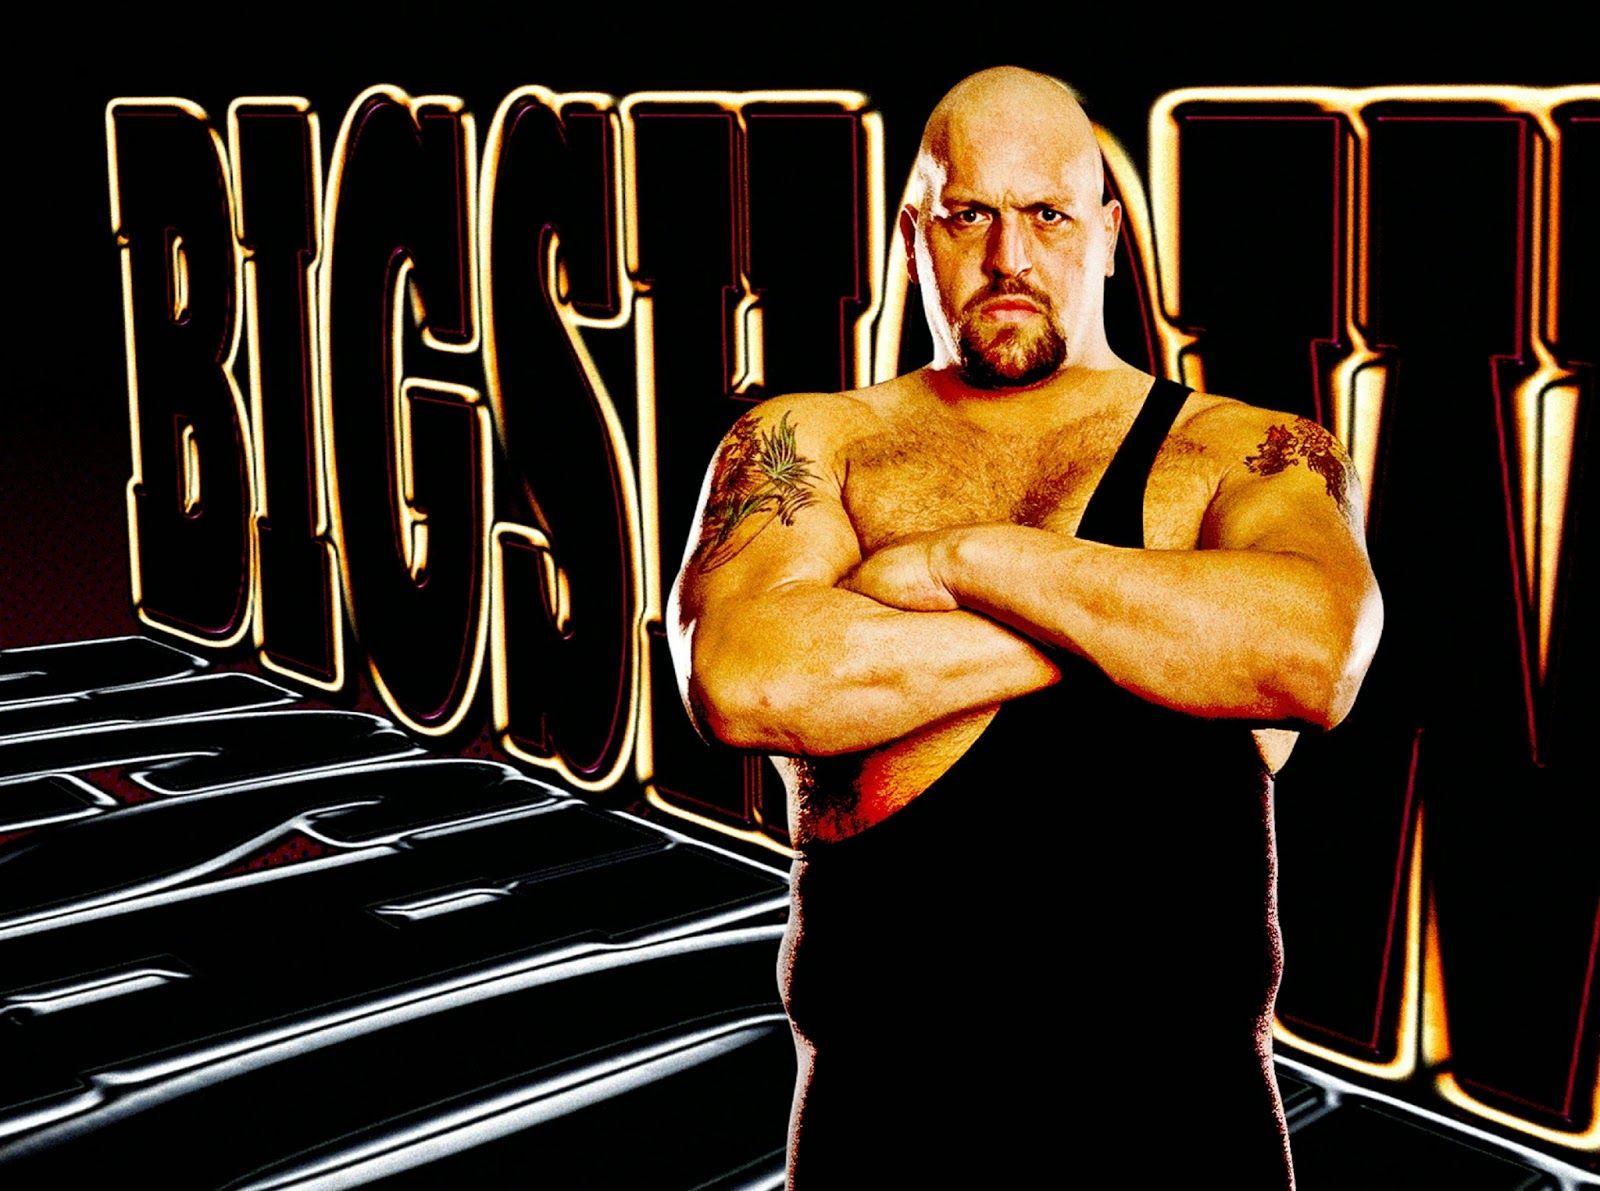 Big Show WWE HD Wallpaper